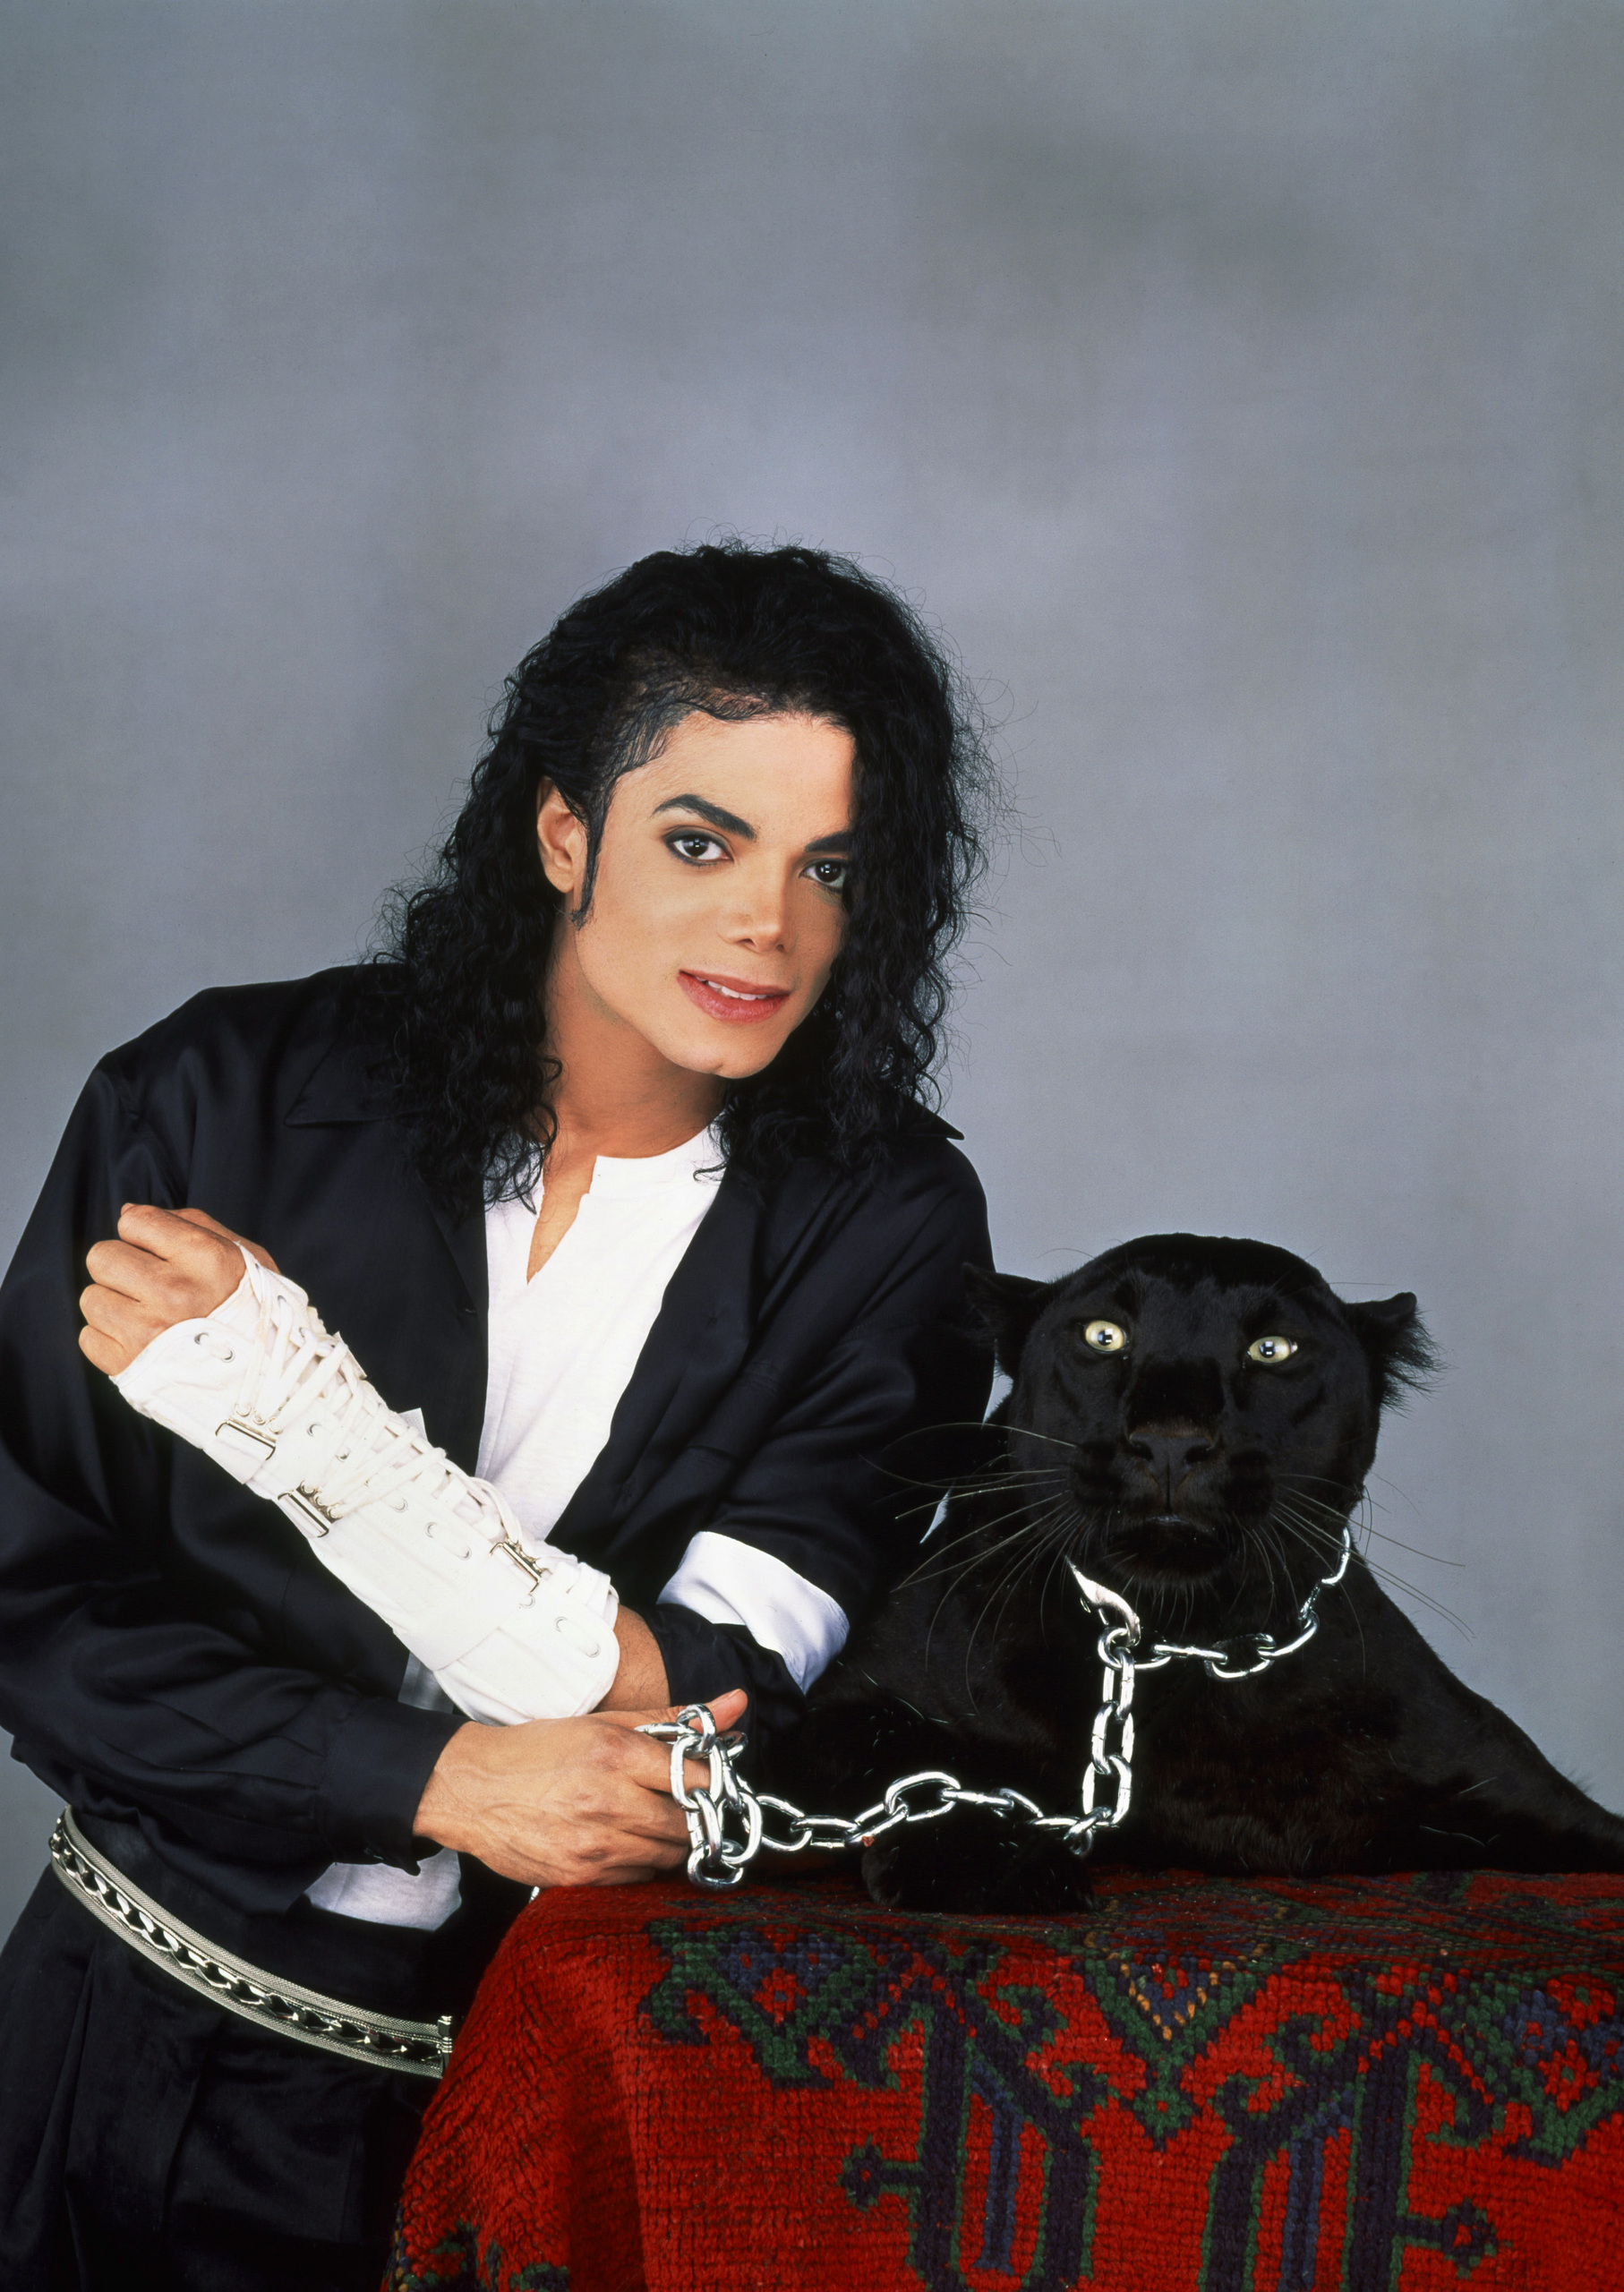 michael and his animals - Michael Jackson Photo (31107663) - Fanpop